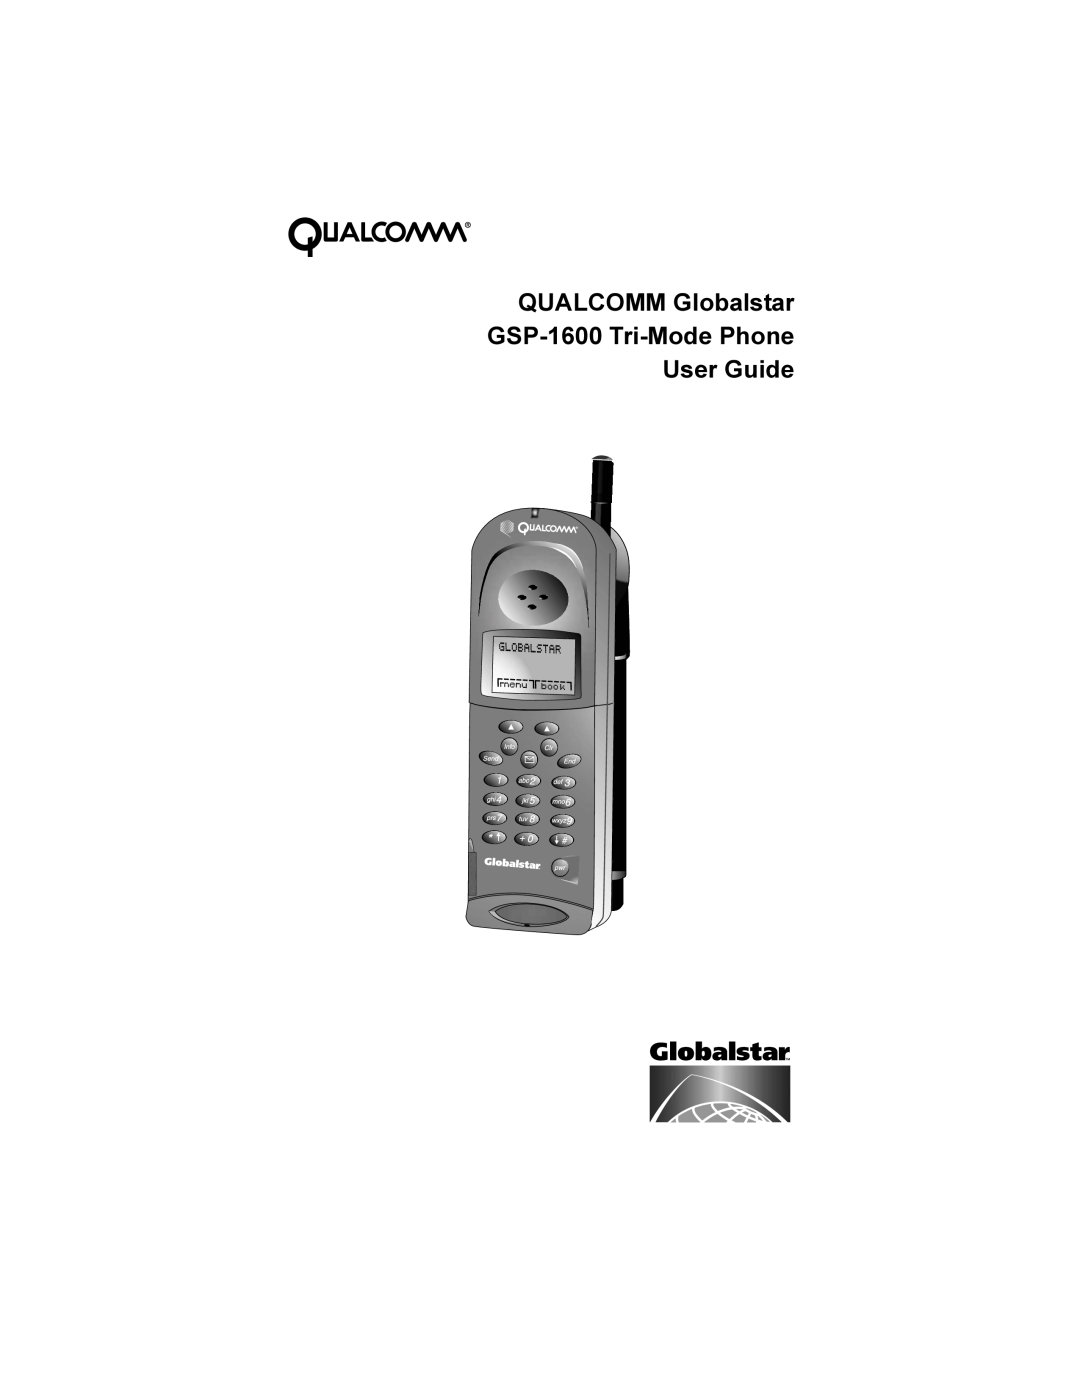 Qualcomm manual QUALCOMM Globalstar GSP-1600 Tri-Mode Phone User Guide 